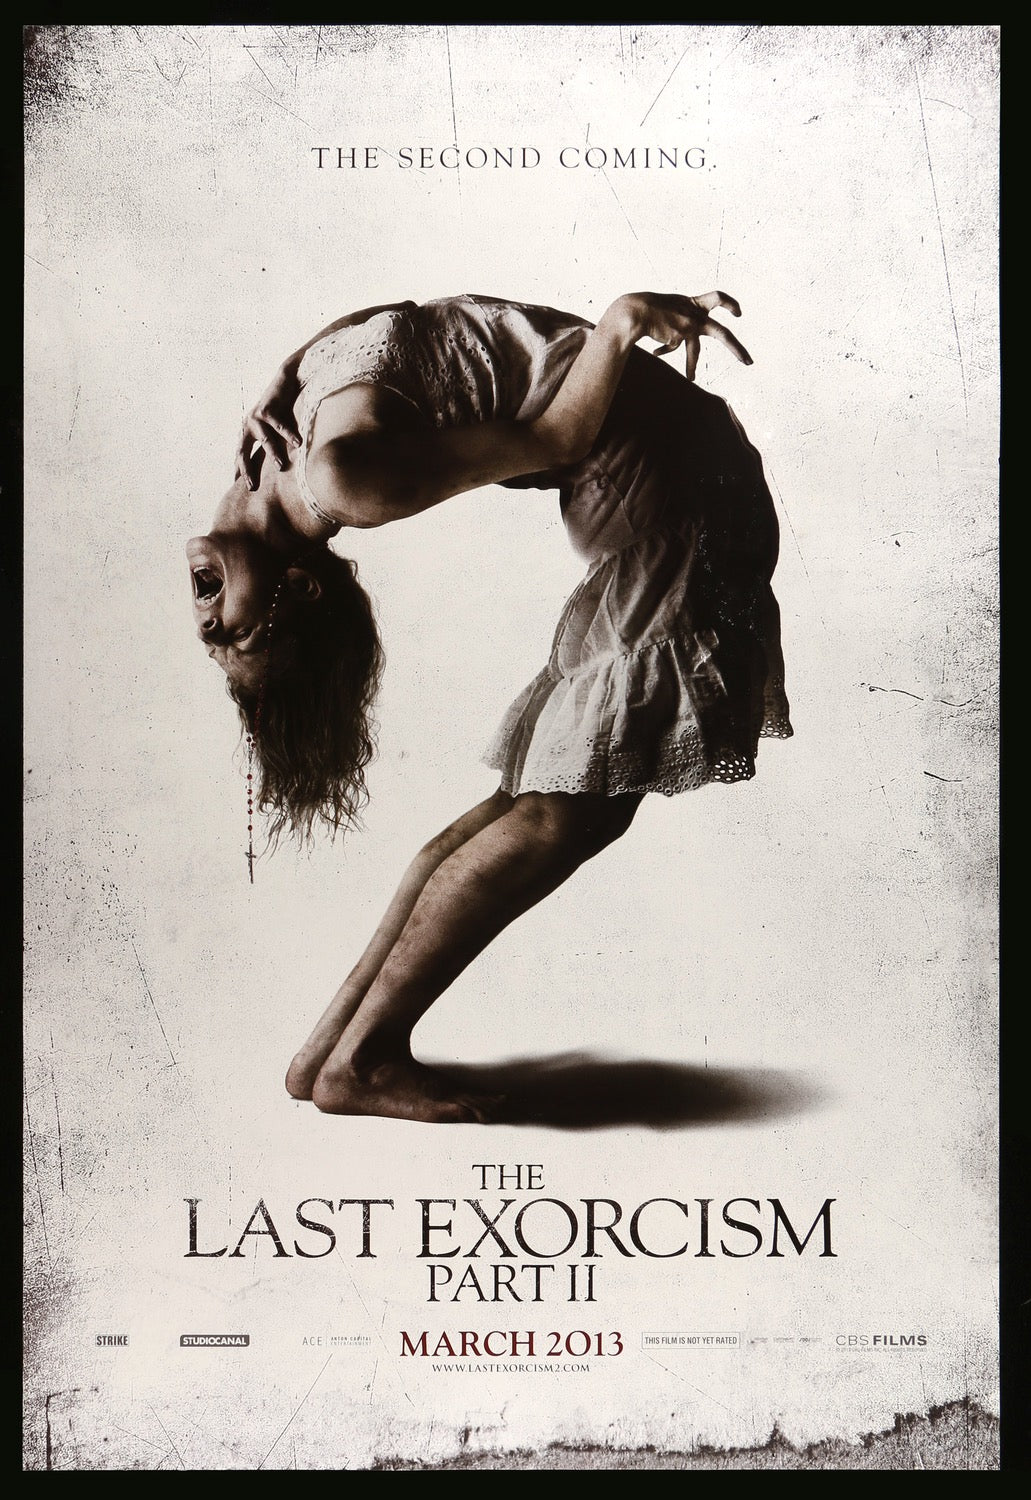 Last Exorcism Part II (2013) original movie poster for sale at Original Film Art